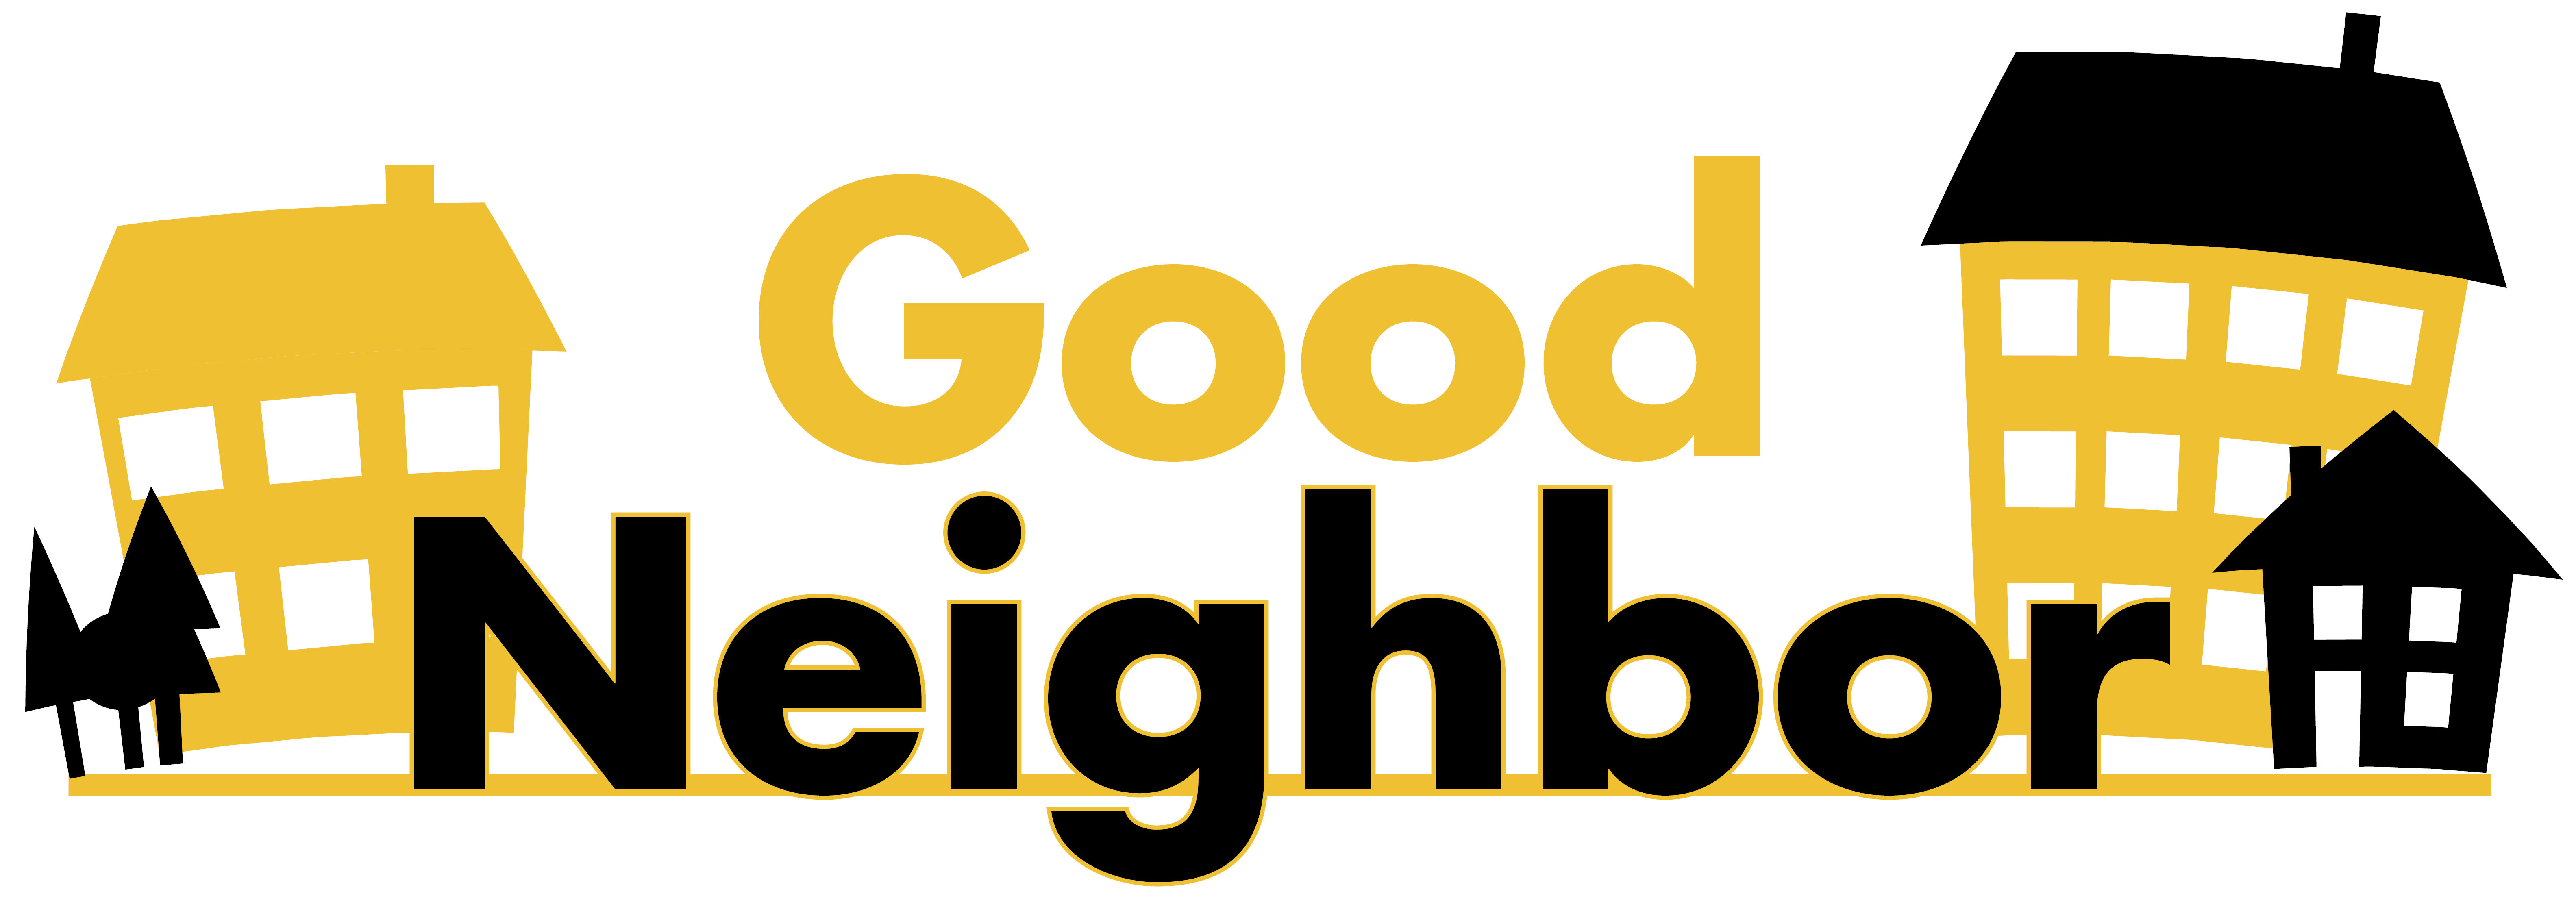 Good Neighbor Program - Off Campus Resource Center